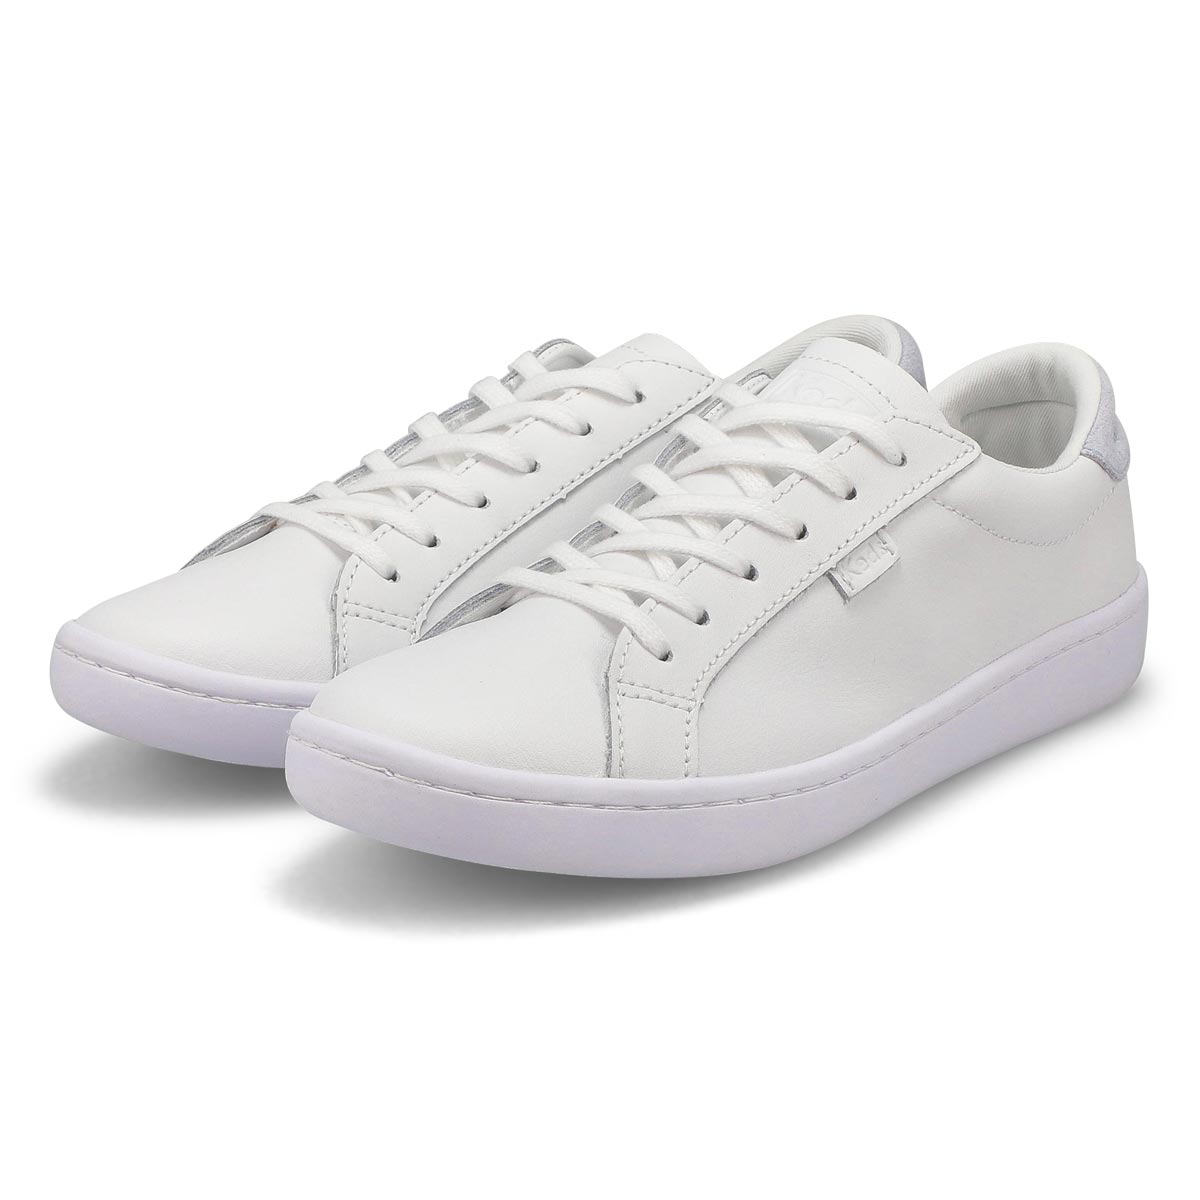 Keds Women's Ace Sneaker - White/Blush | SoftMoc.com